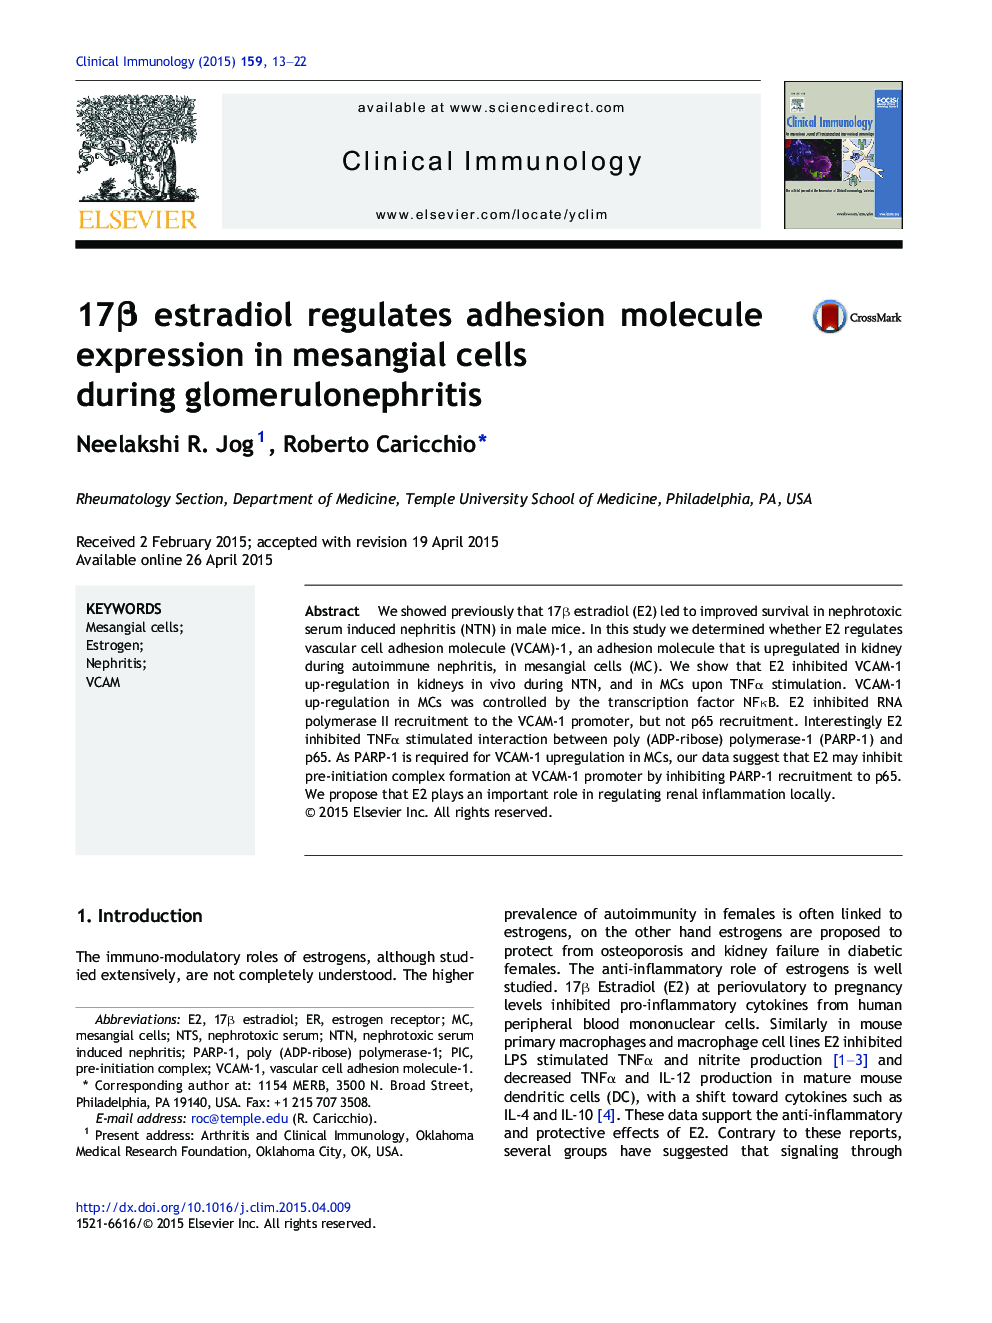 17Î² estradiol regulates adhesion molecule expression in mesangial cells during glomerulonephritis